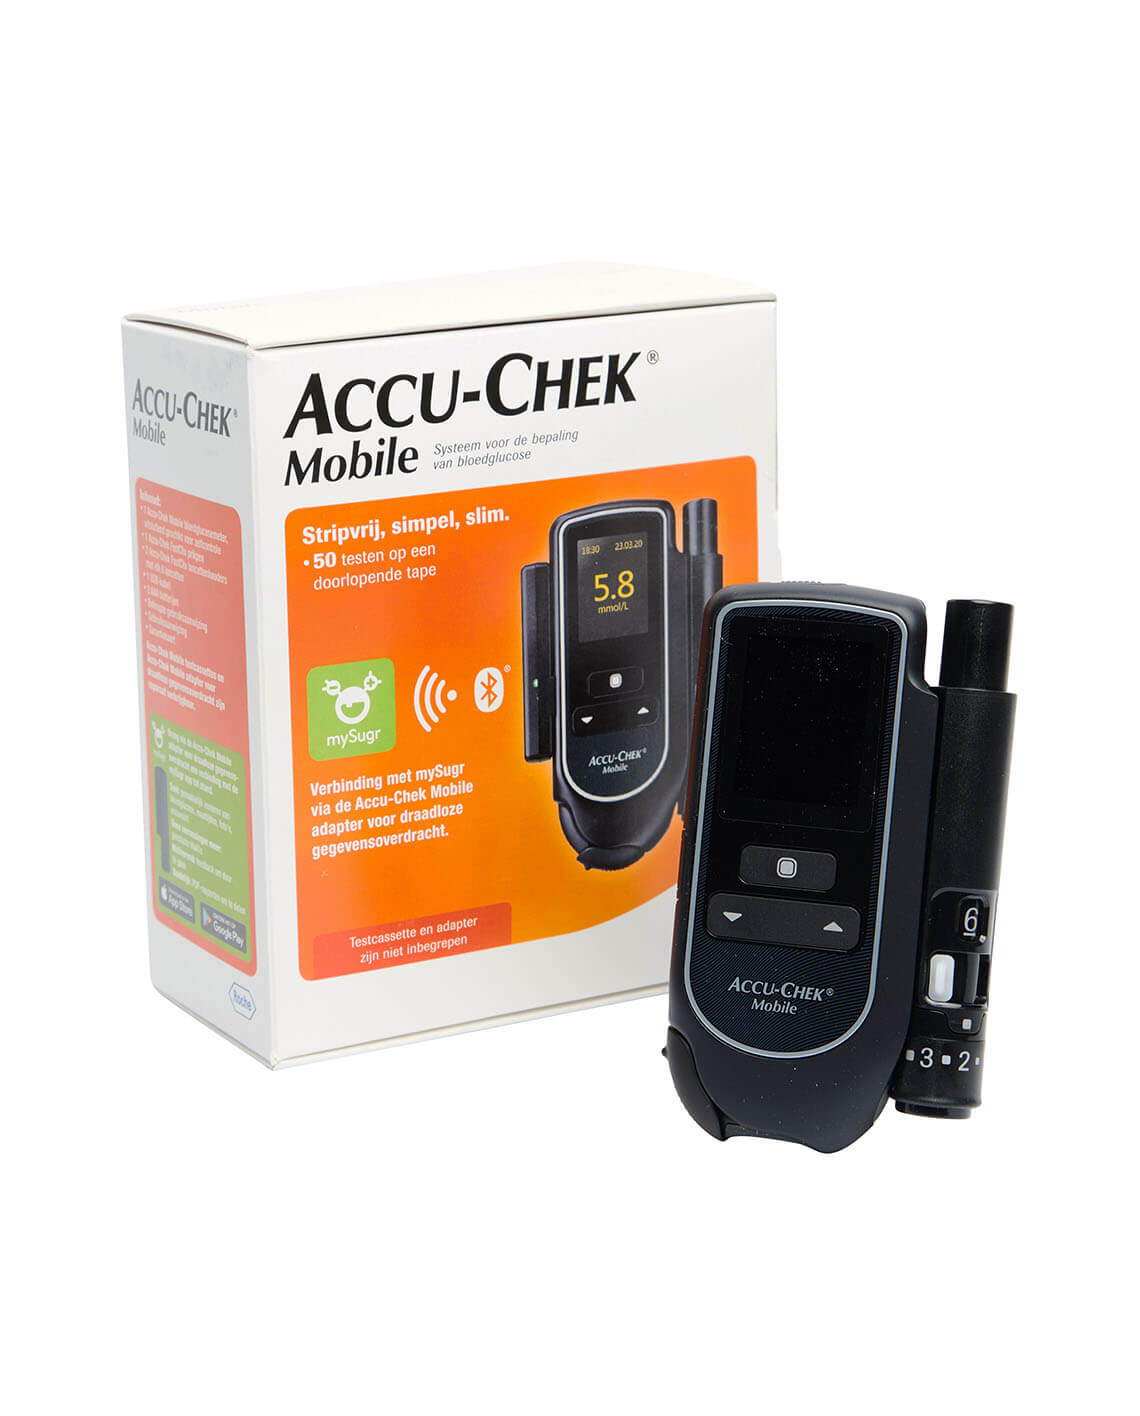 wraak noodzaak voorzichtig Accu-Chek Mobile Glucosemeter | diabetesmagazijn.nl